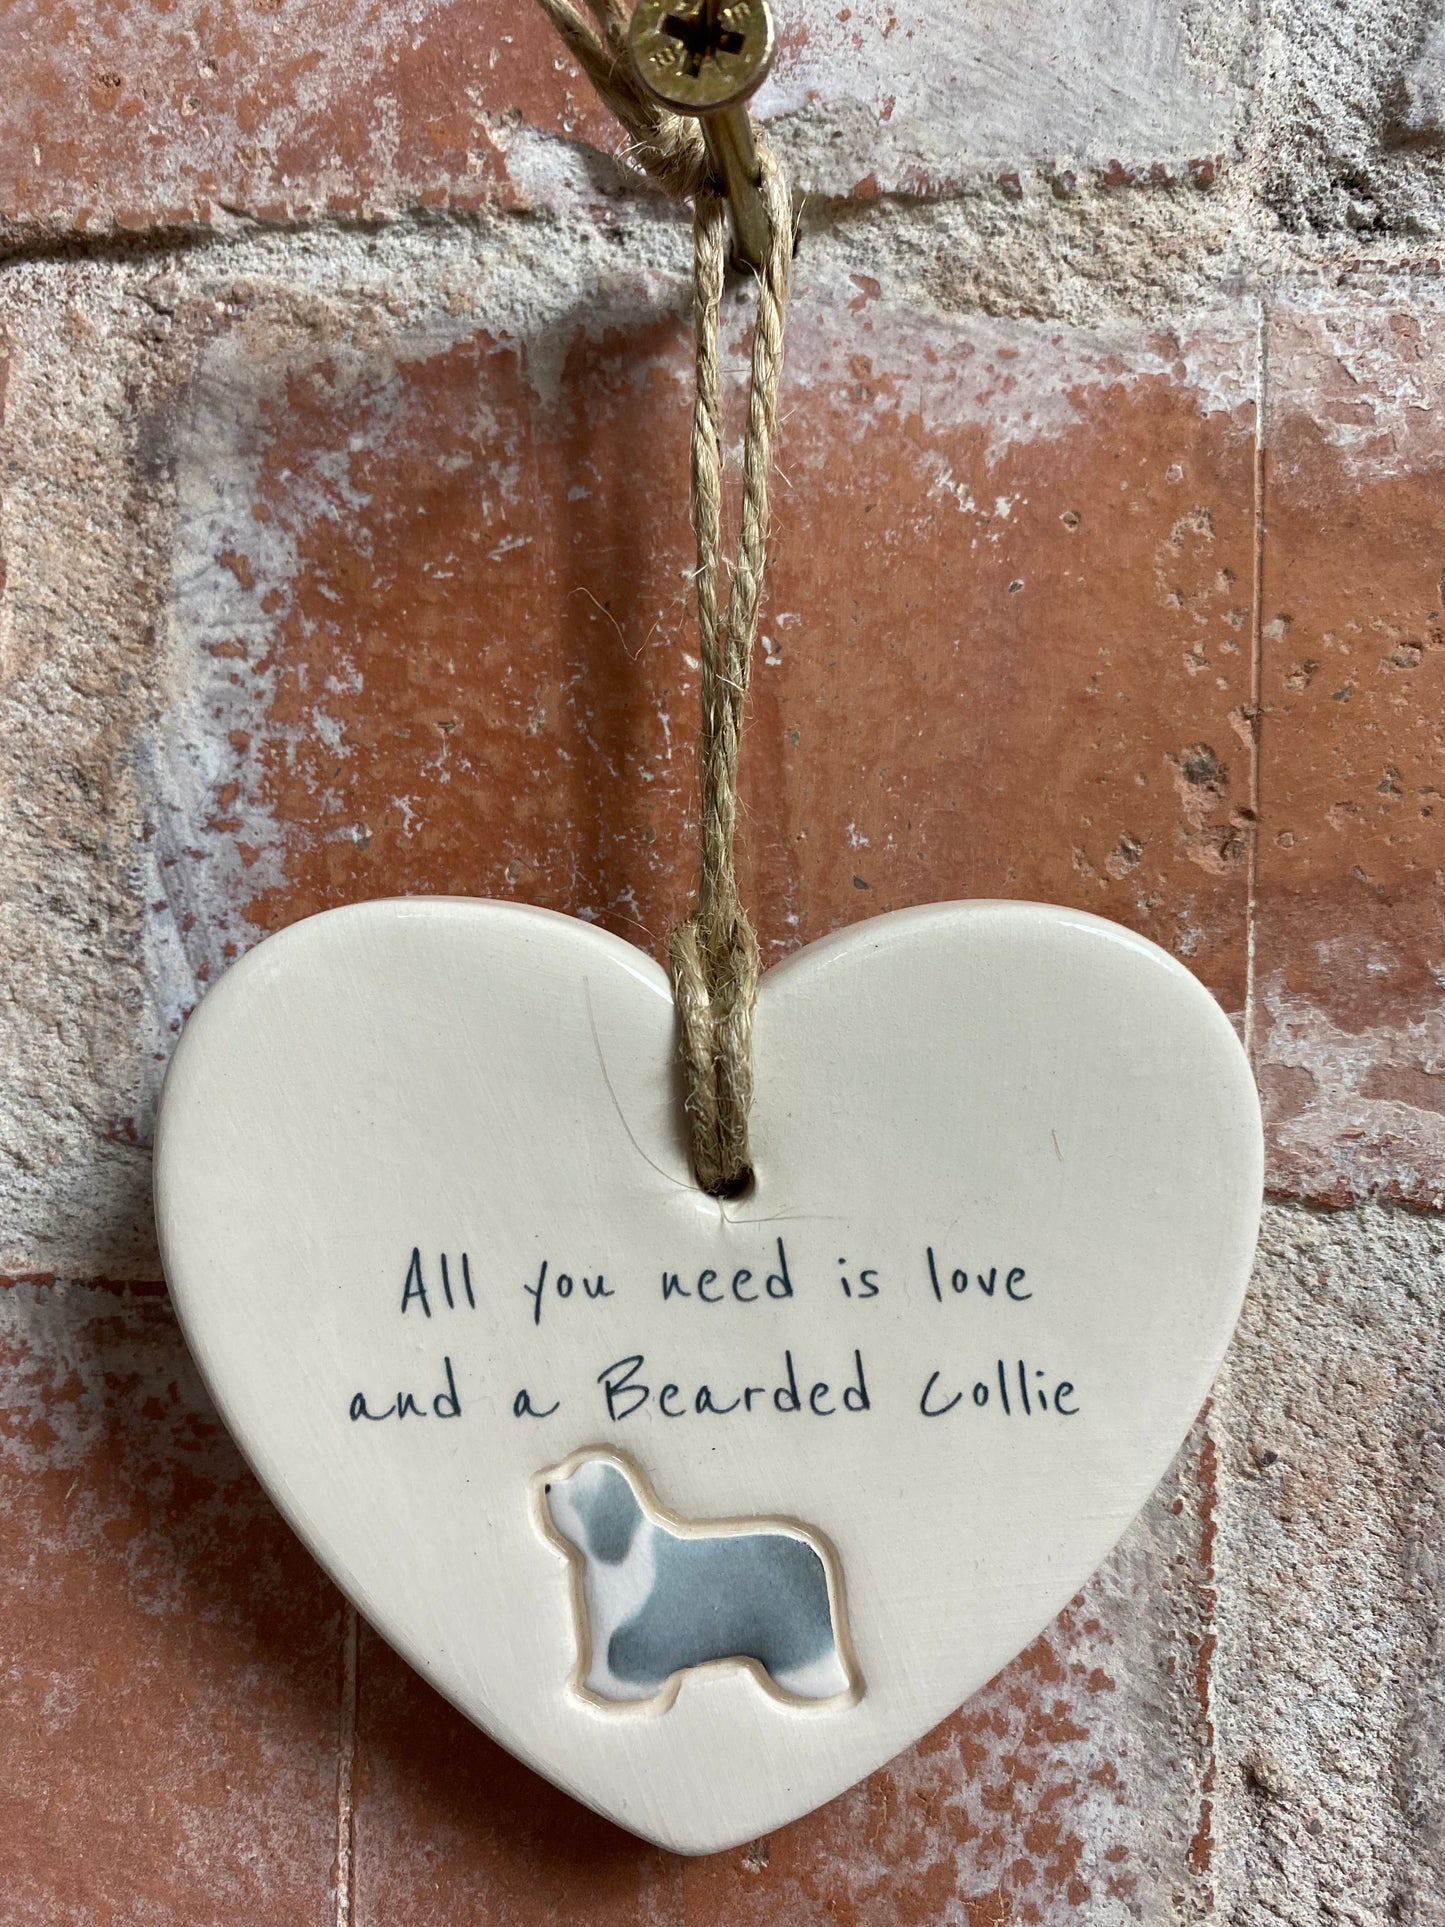 Bearded Collie ceramic heart